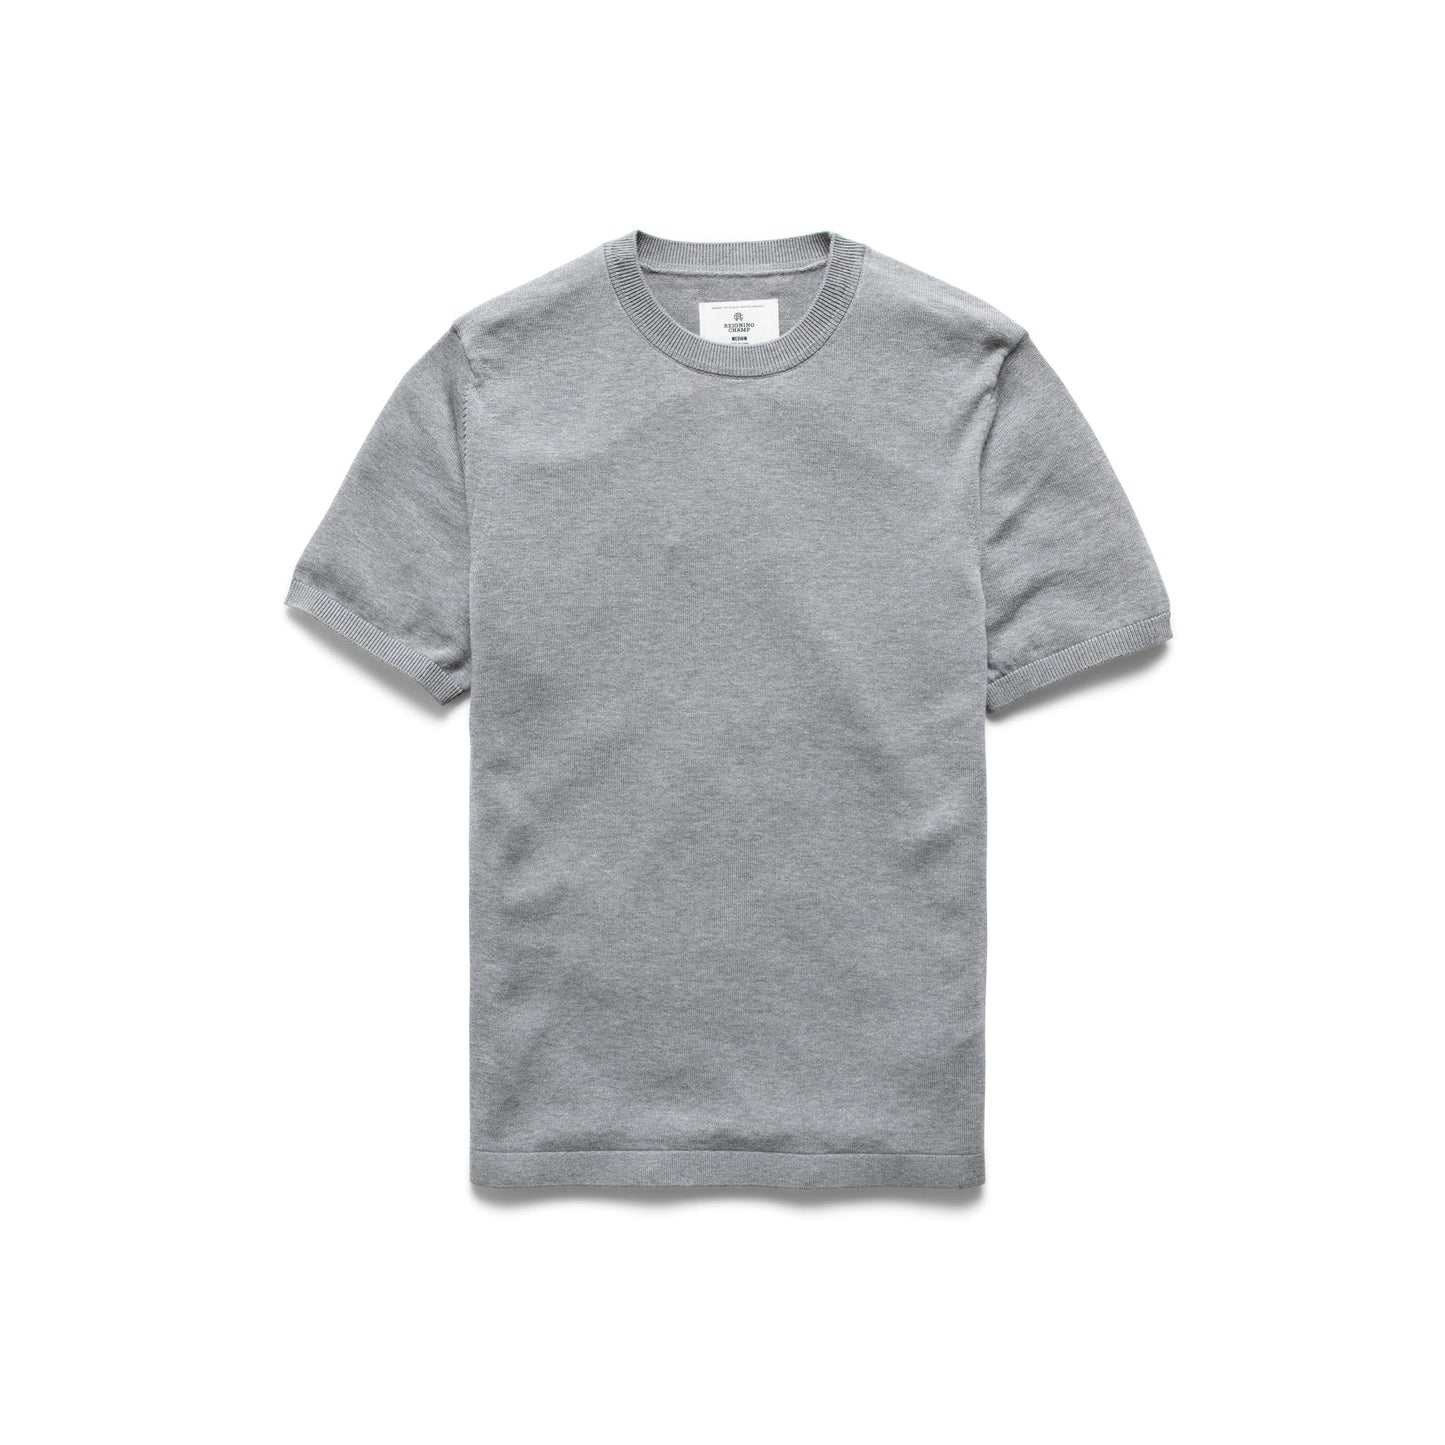 Cotton Cashmere Riviera T-shirt